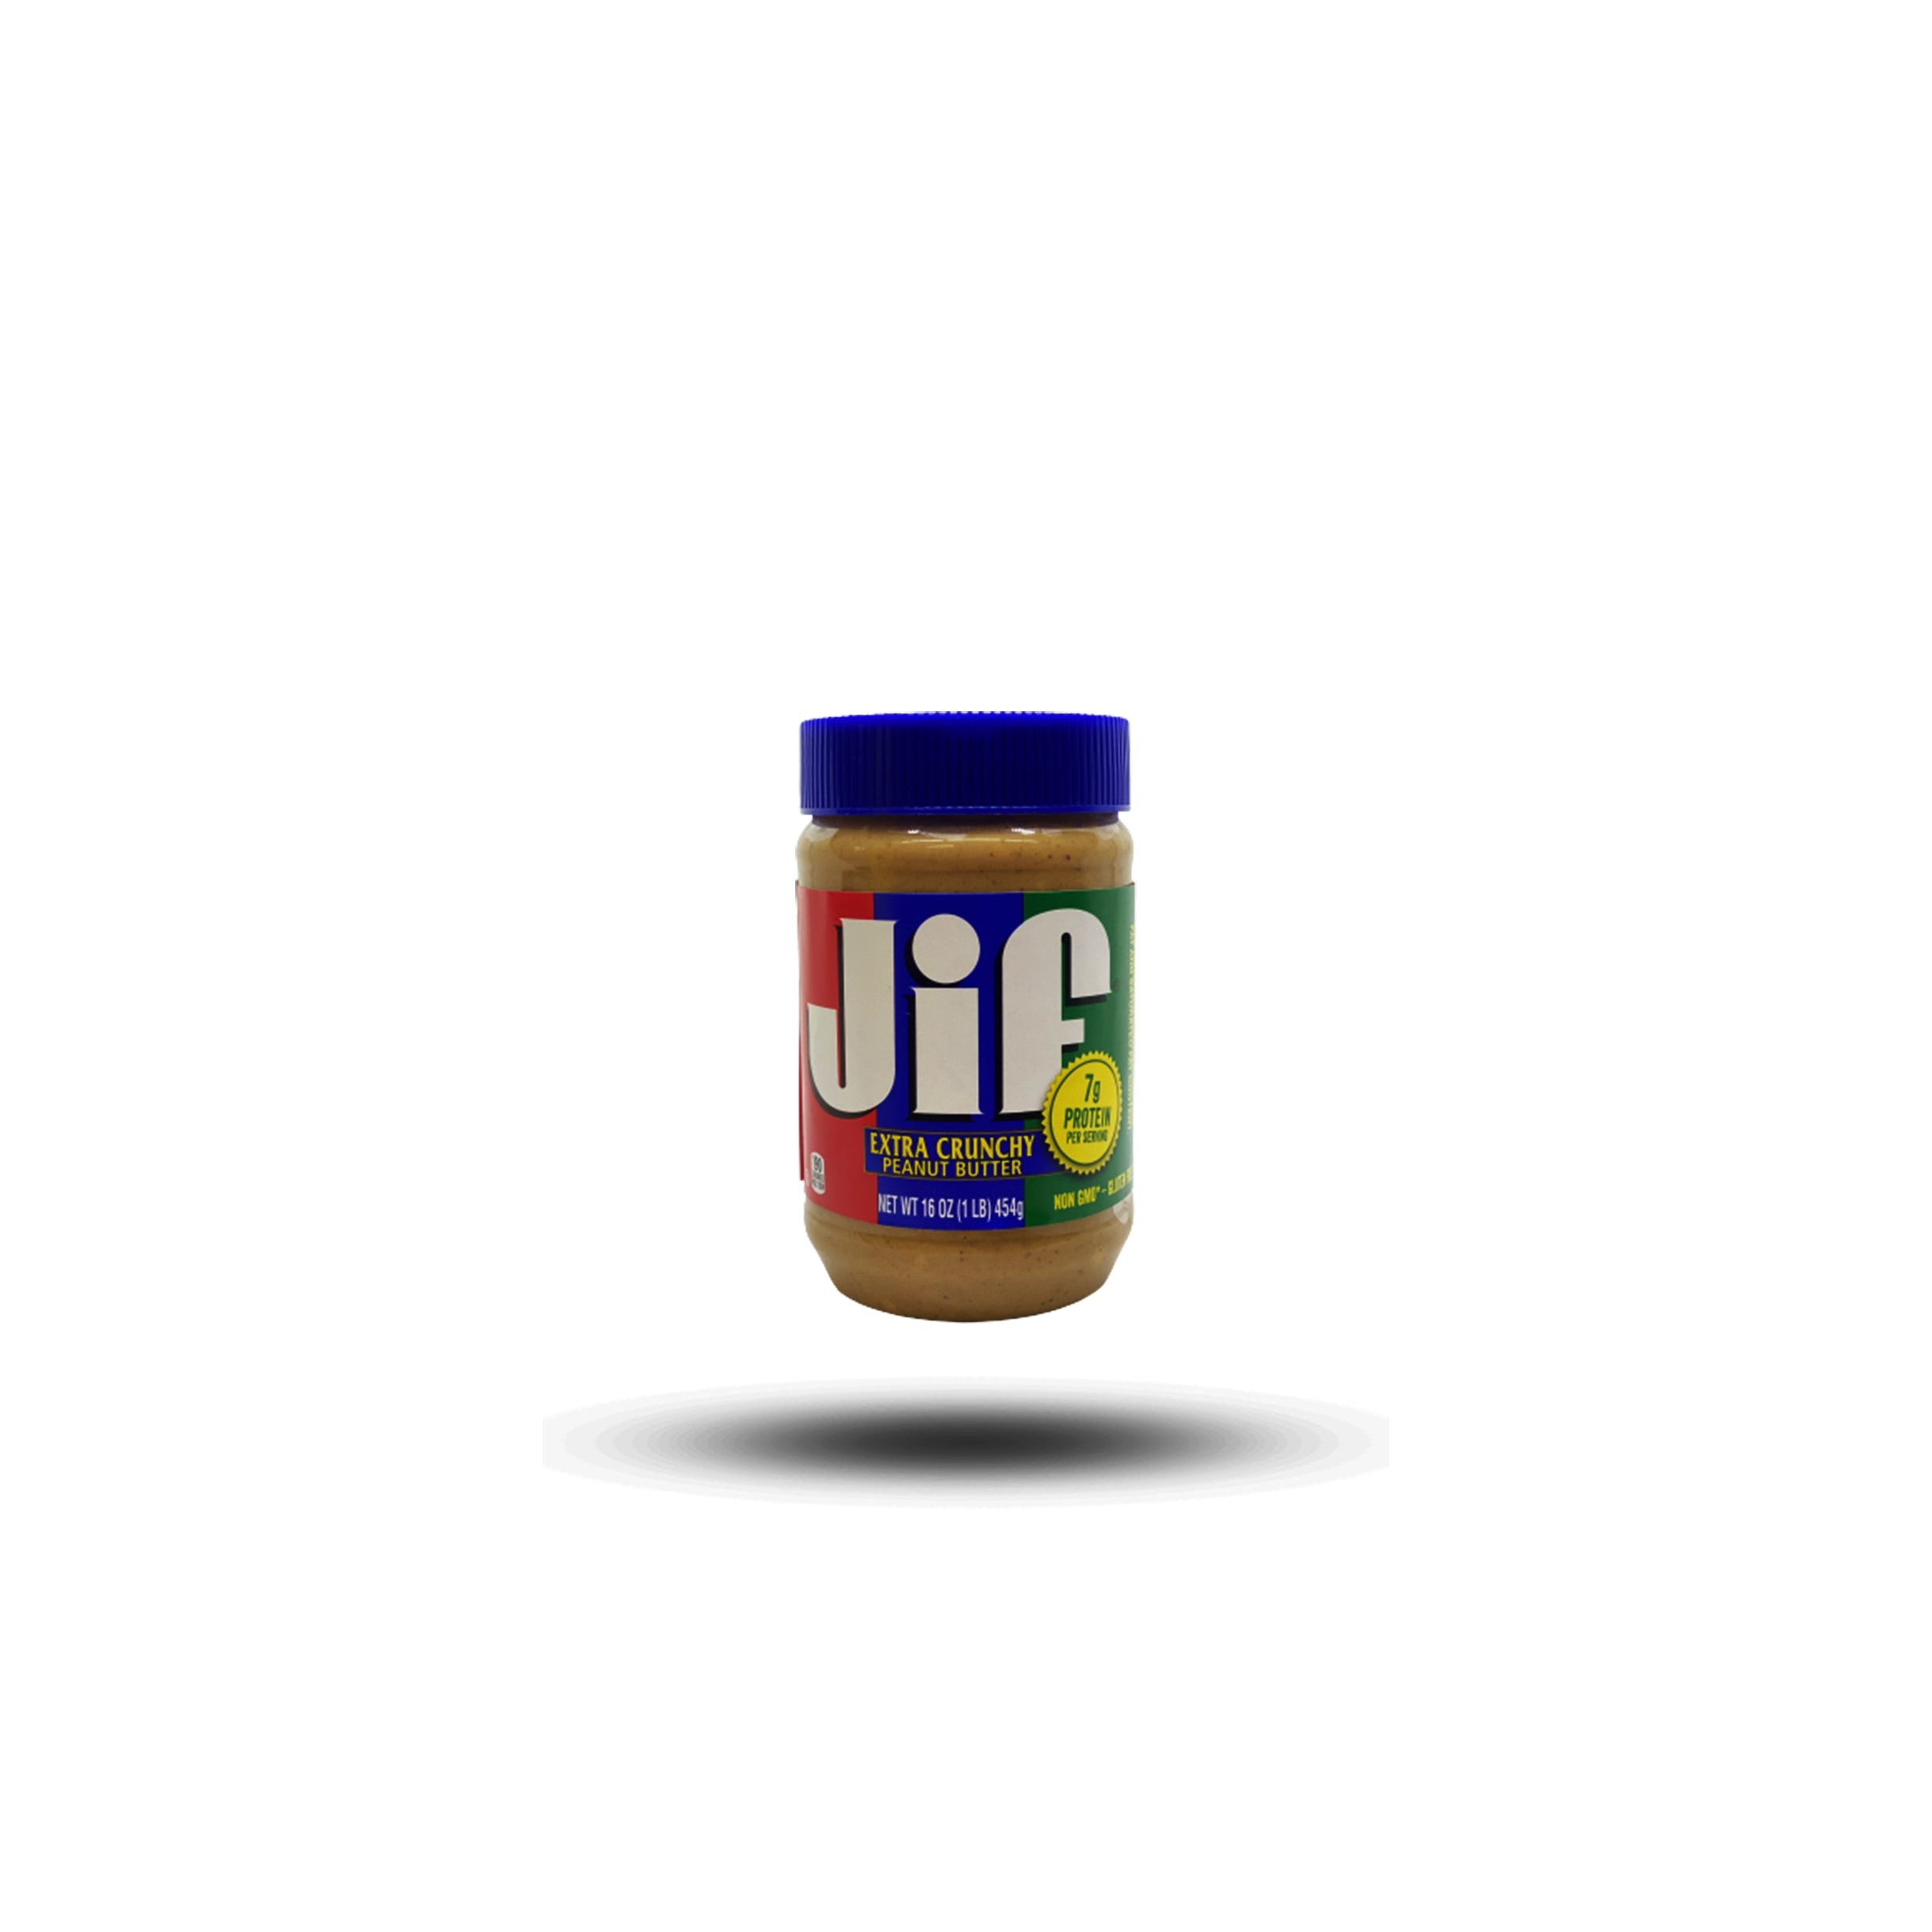 Jif - Extra Crunchy Peanut Butter 454g-The J.M Smucker Company-SNACK SHOP AUSTRIA